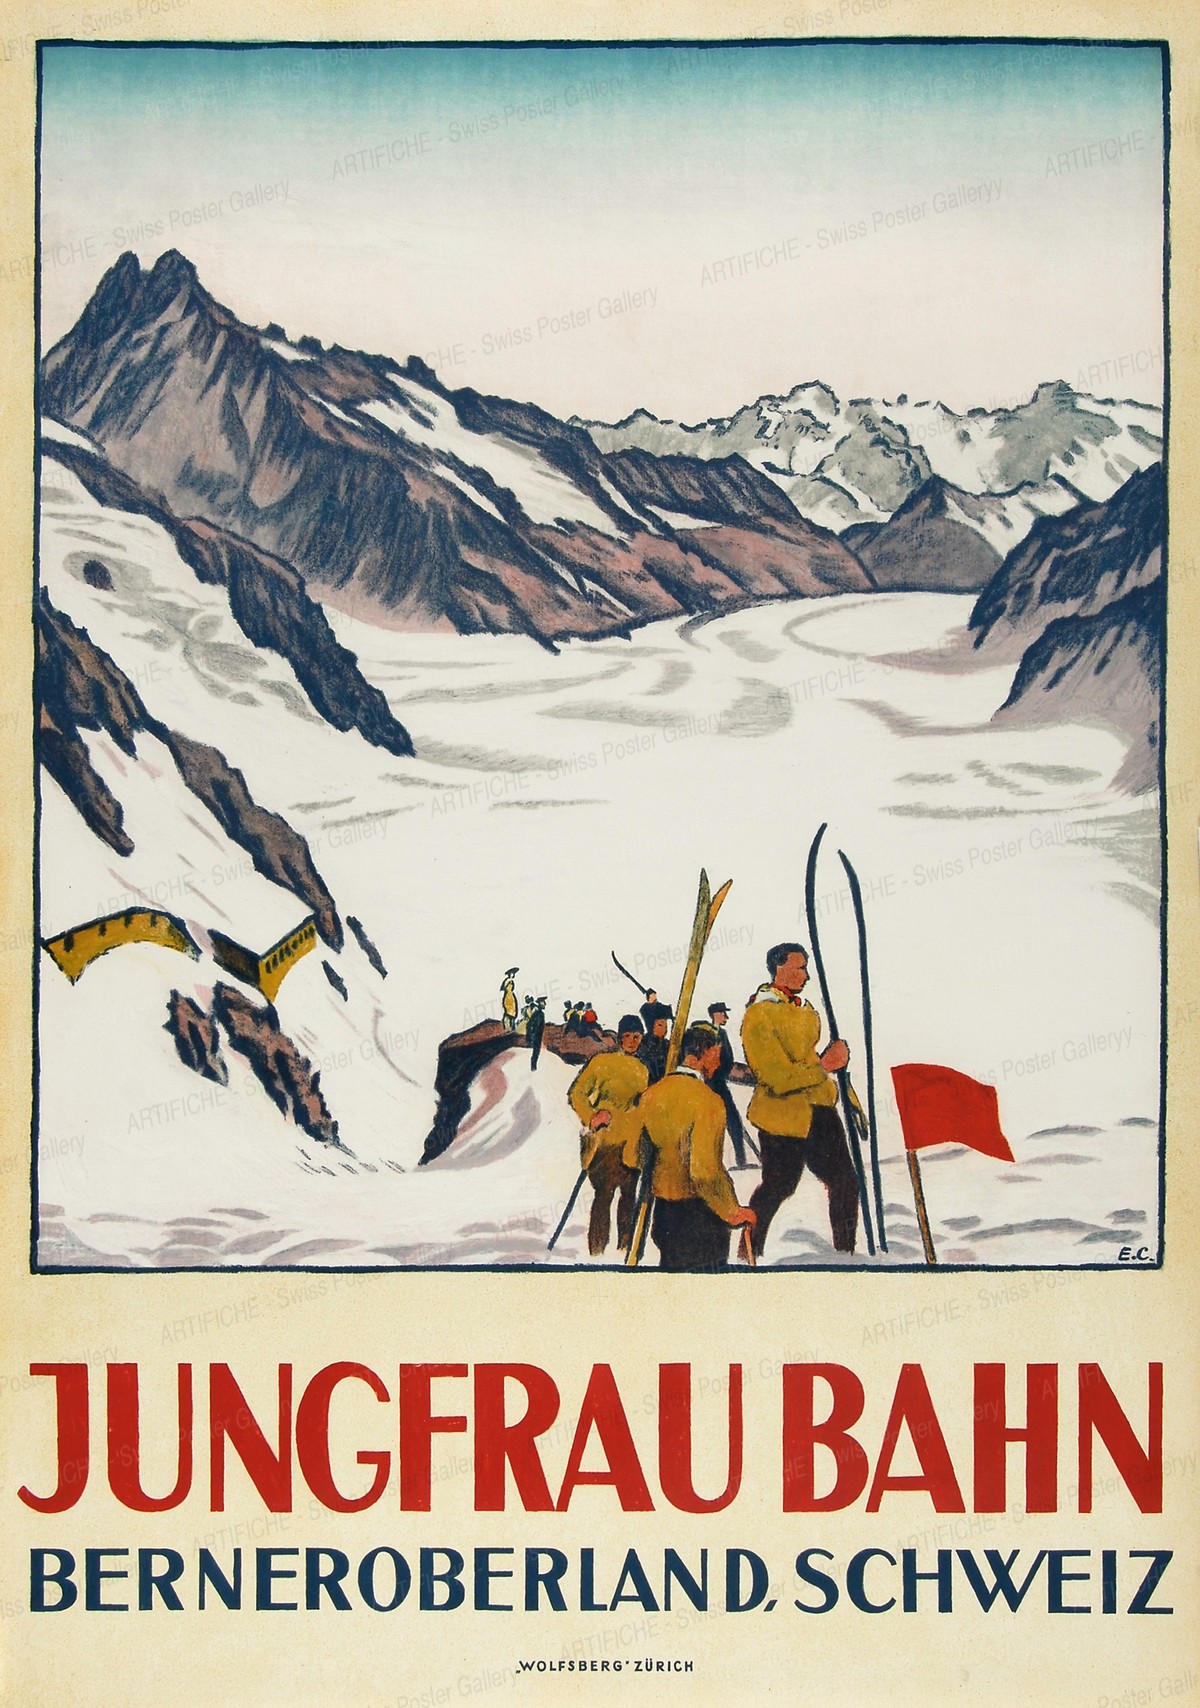 Jungfrau Railway – Bernese Oberland – Switzerland, Emil Cardinaux